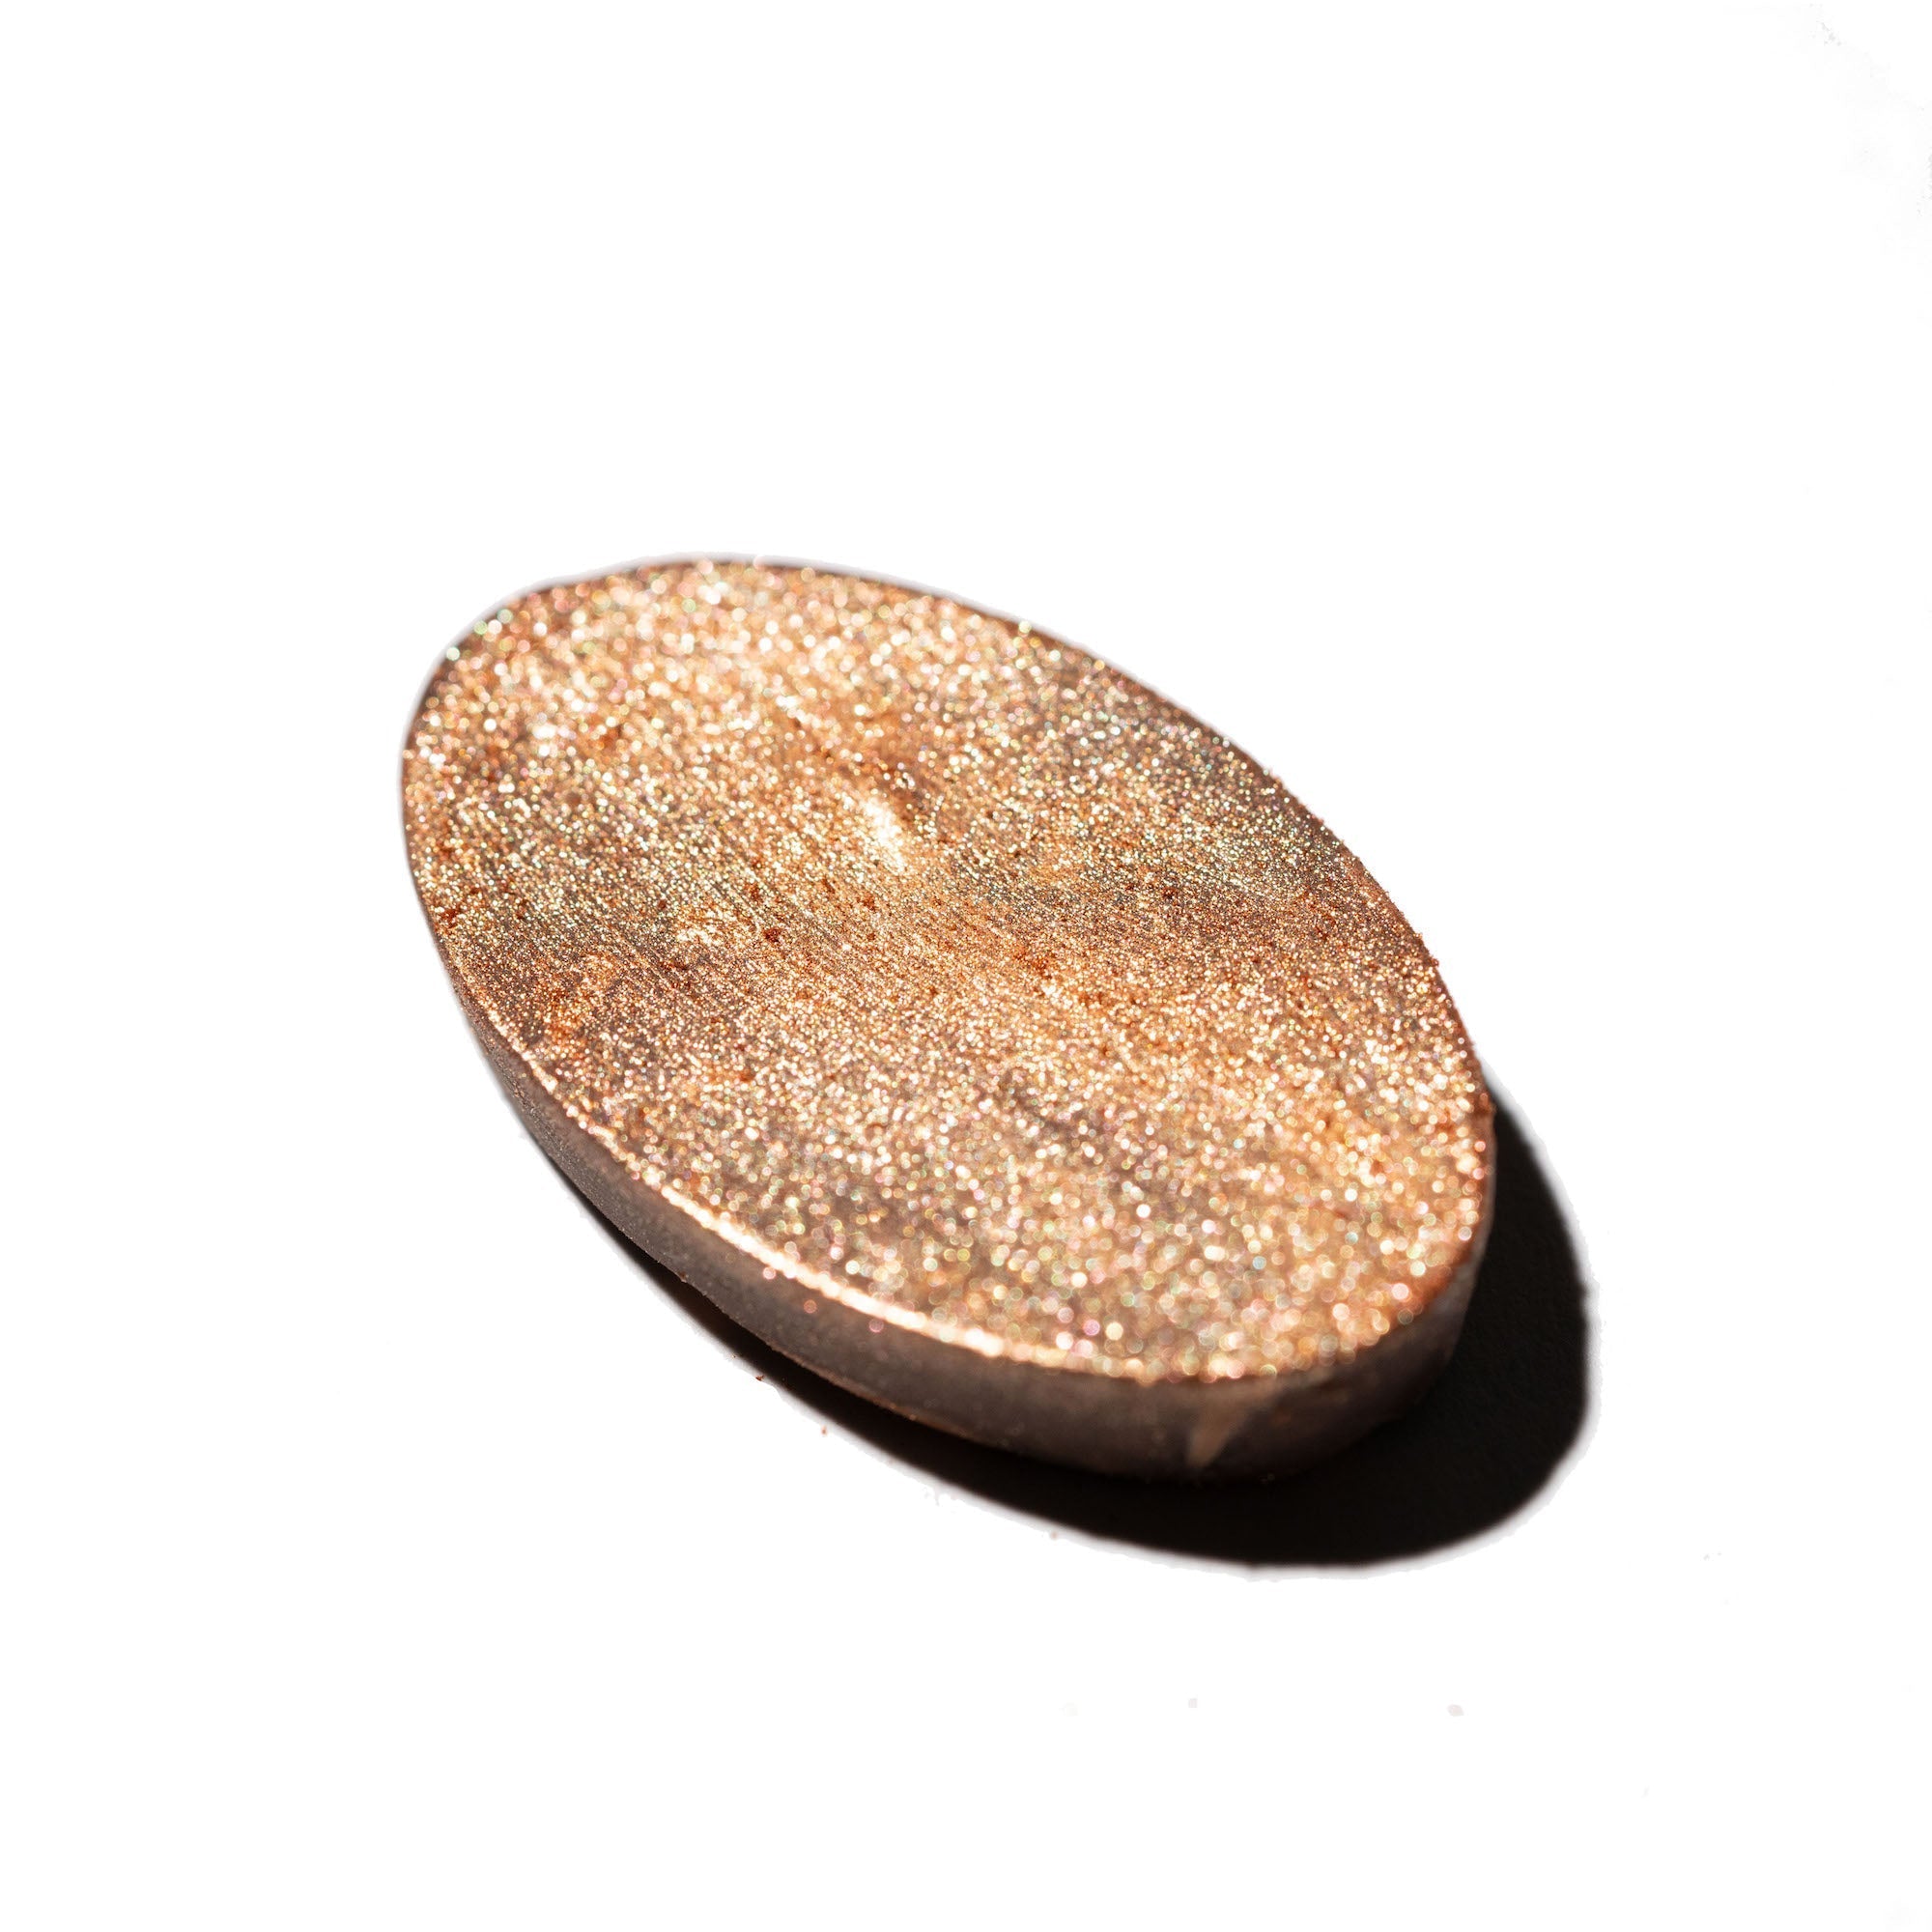 GUSTA SUPPLIES Metallic Bronze Food Colouring Powder, 2g